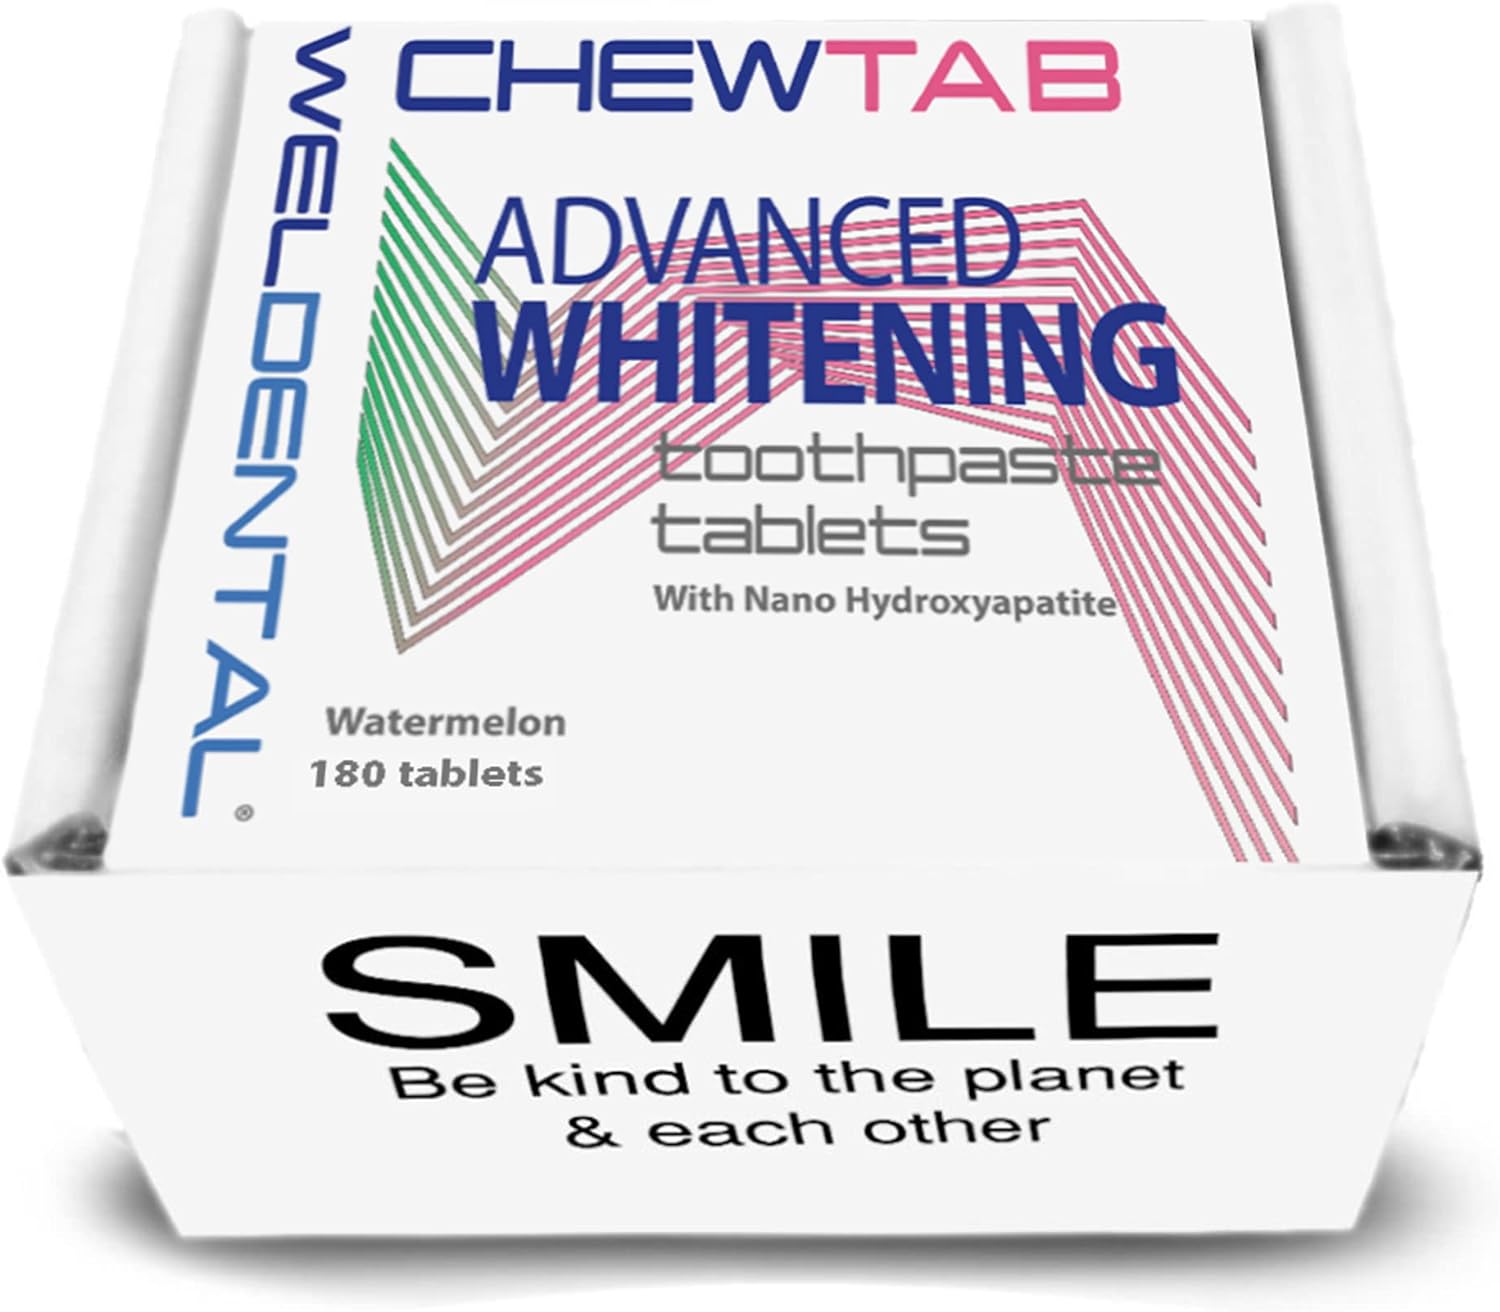 Weldental Chewtab Advanced Whitening Toothpaste Tablets with Nano-Hydroxyapatite Refill (Watermelon)